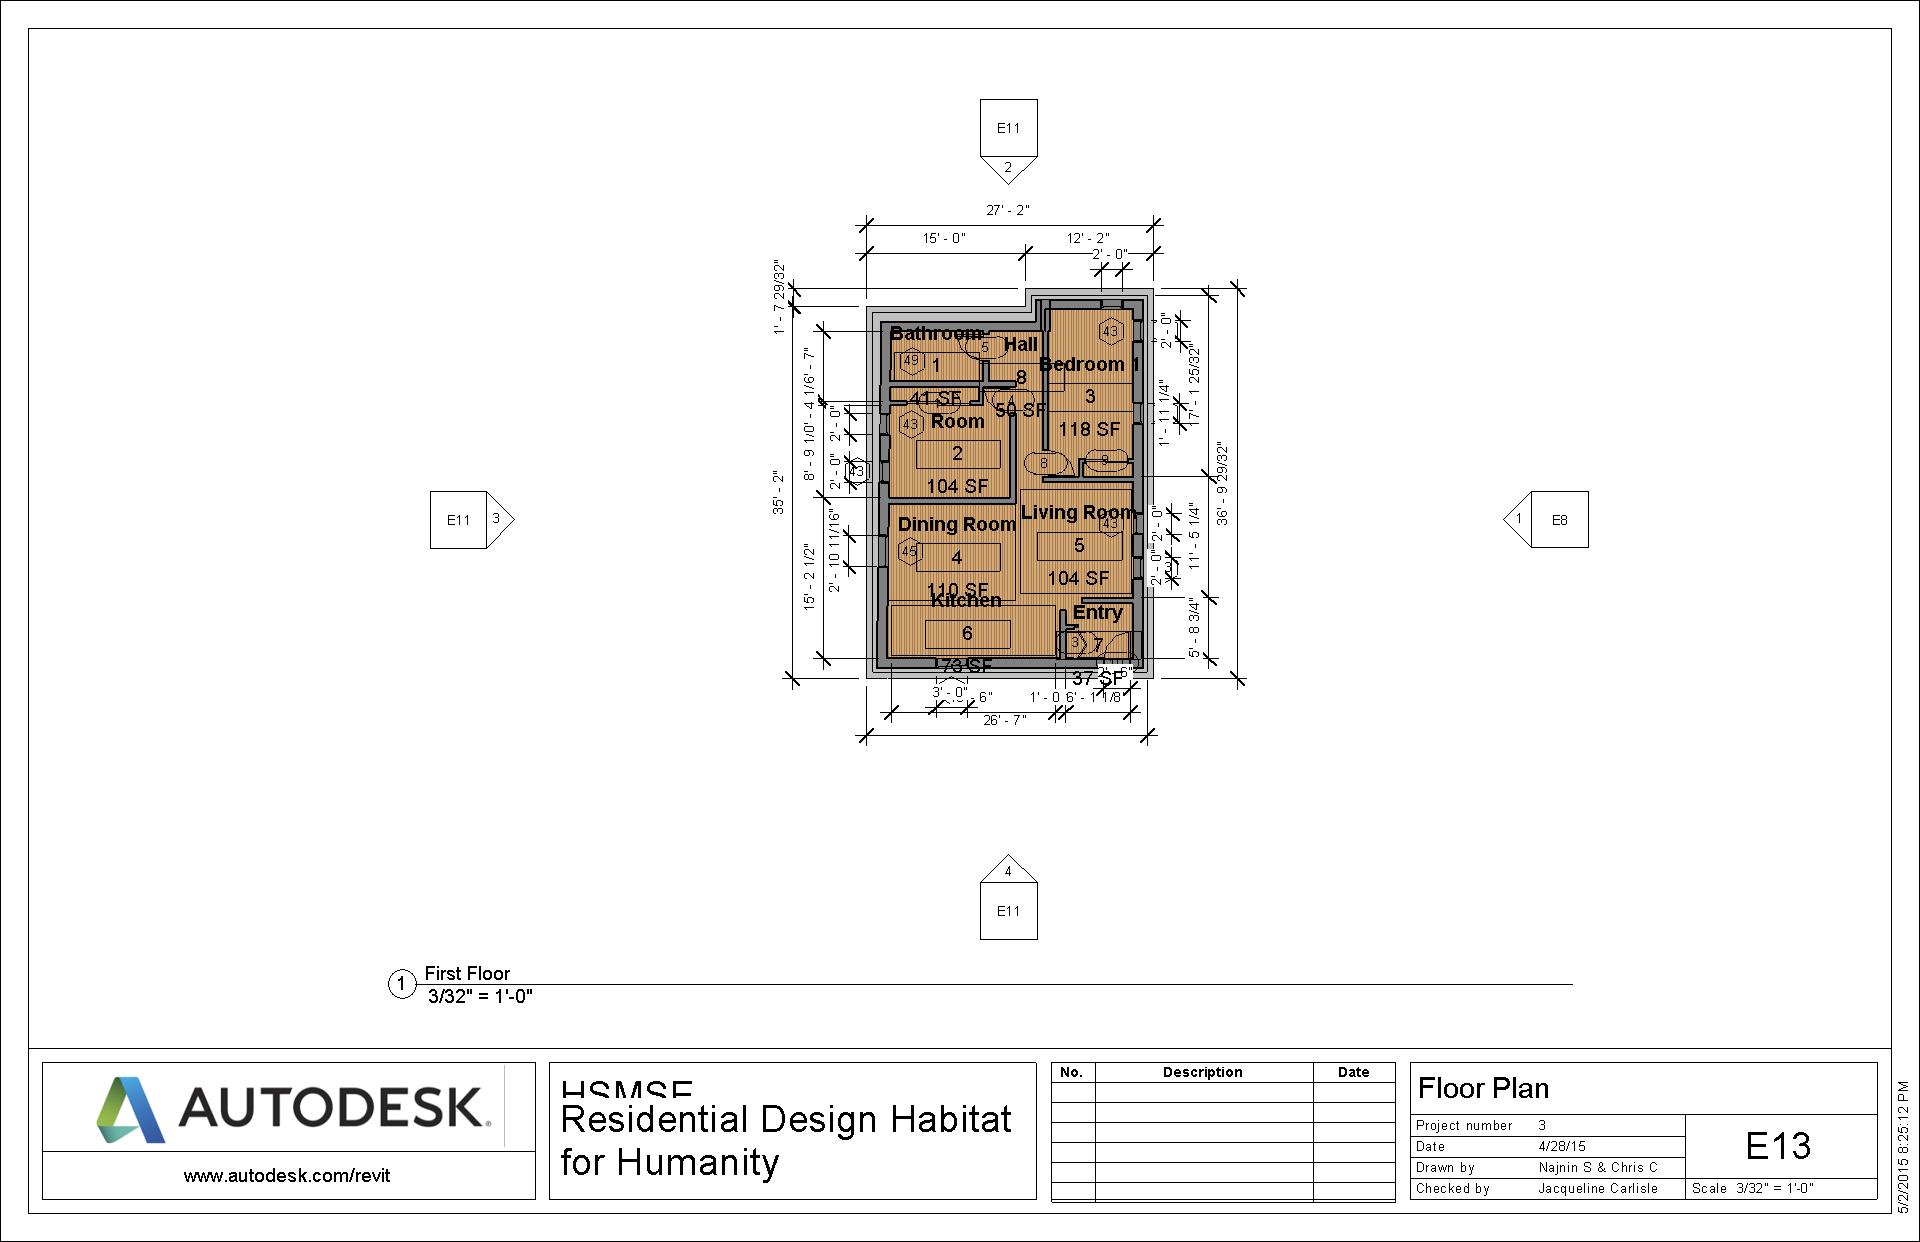 3 Habitat for Humanity Residential Design